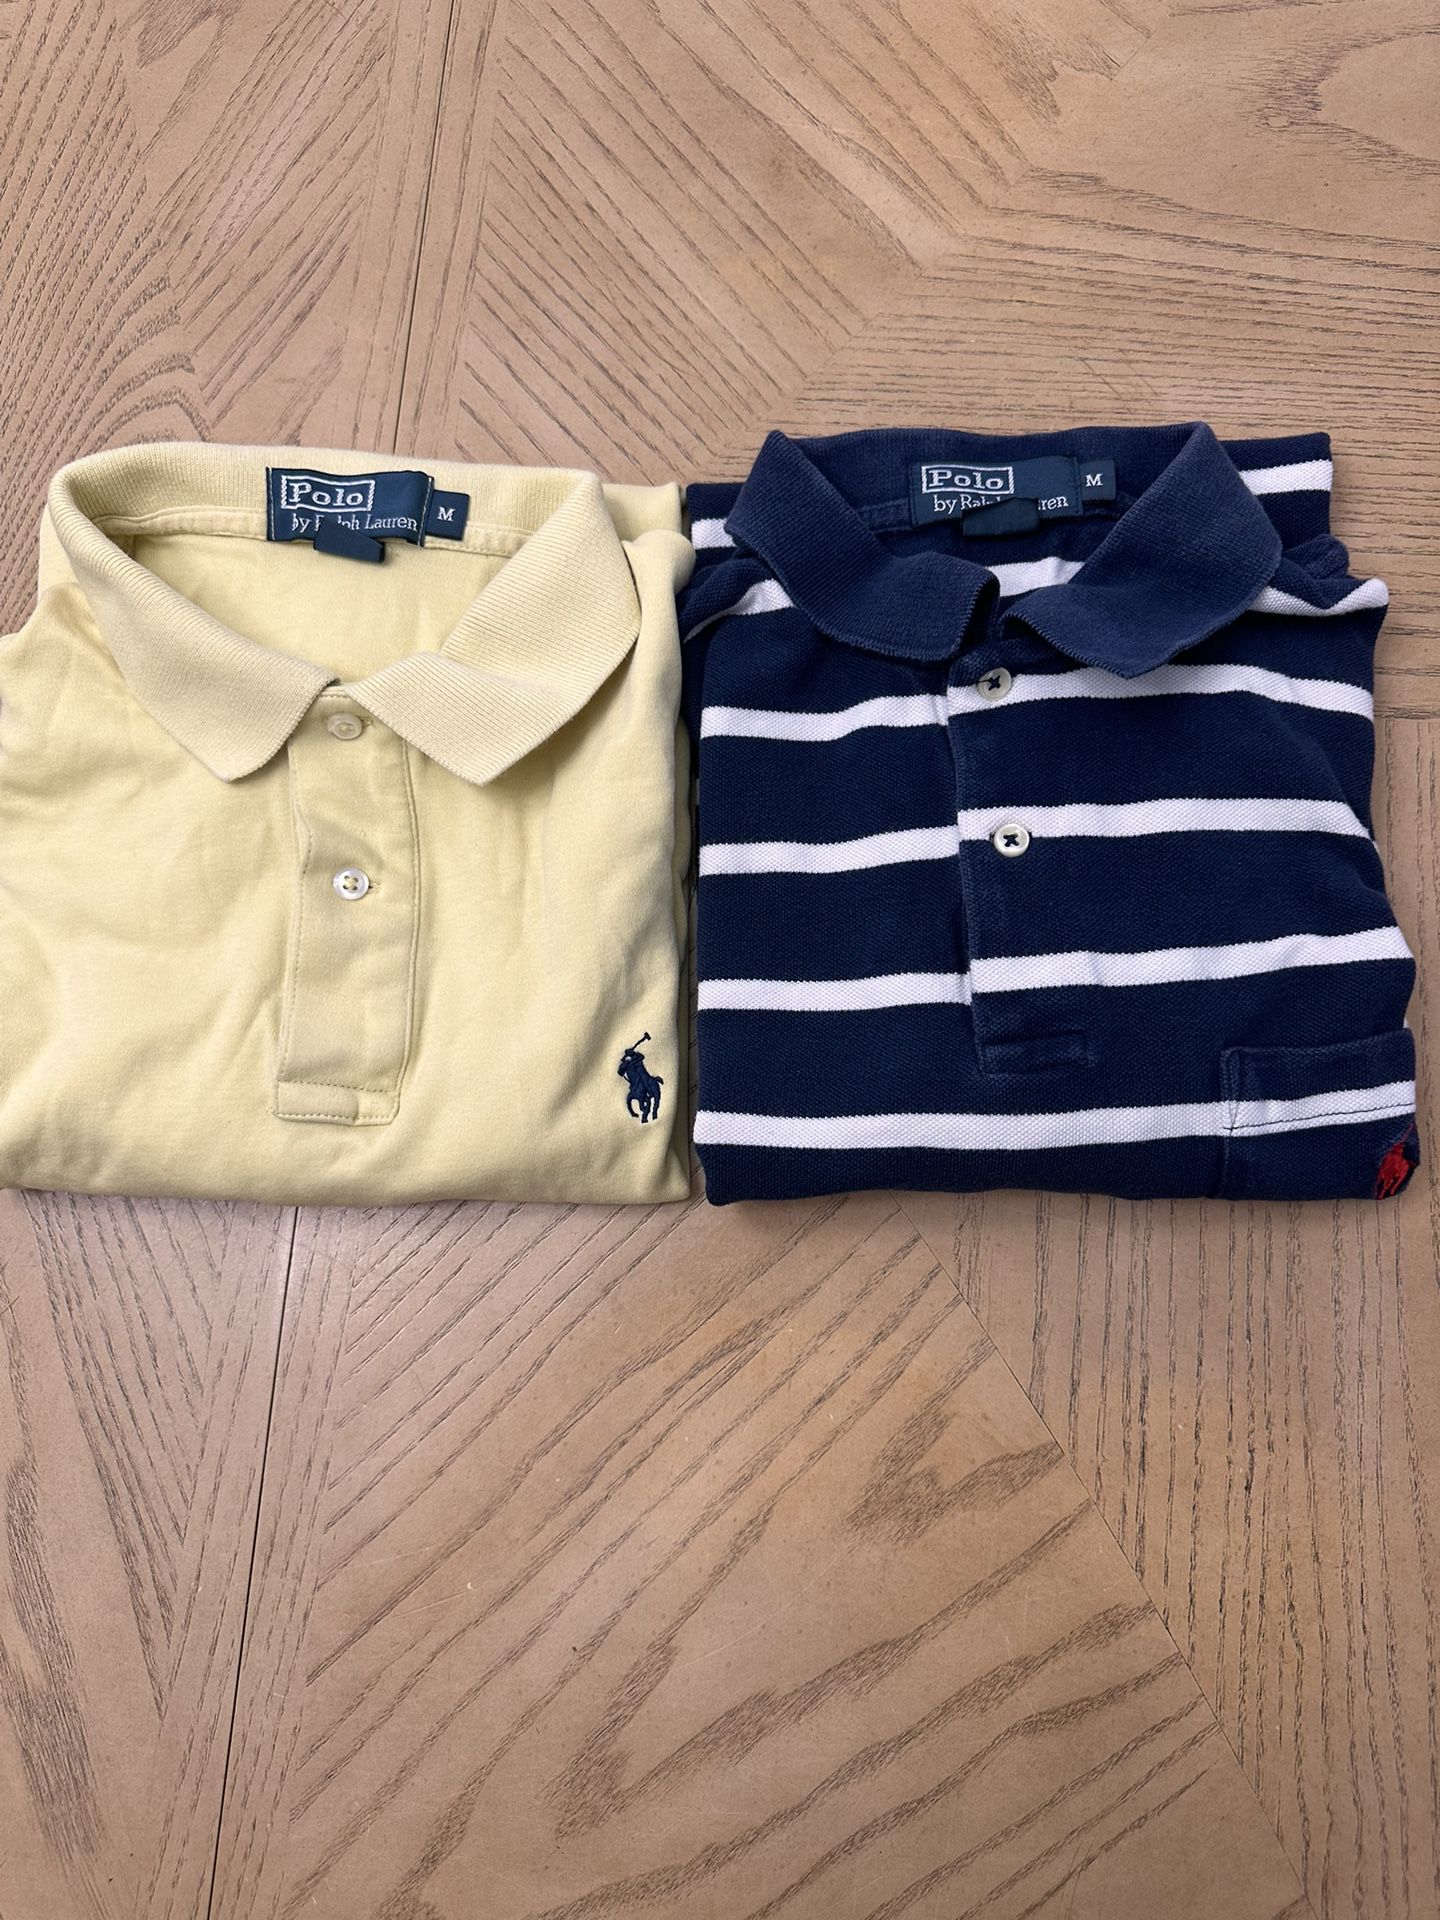 2 Ralph Lauren polo shirts  Size medium